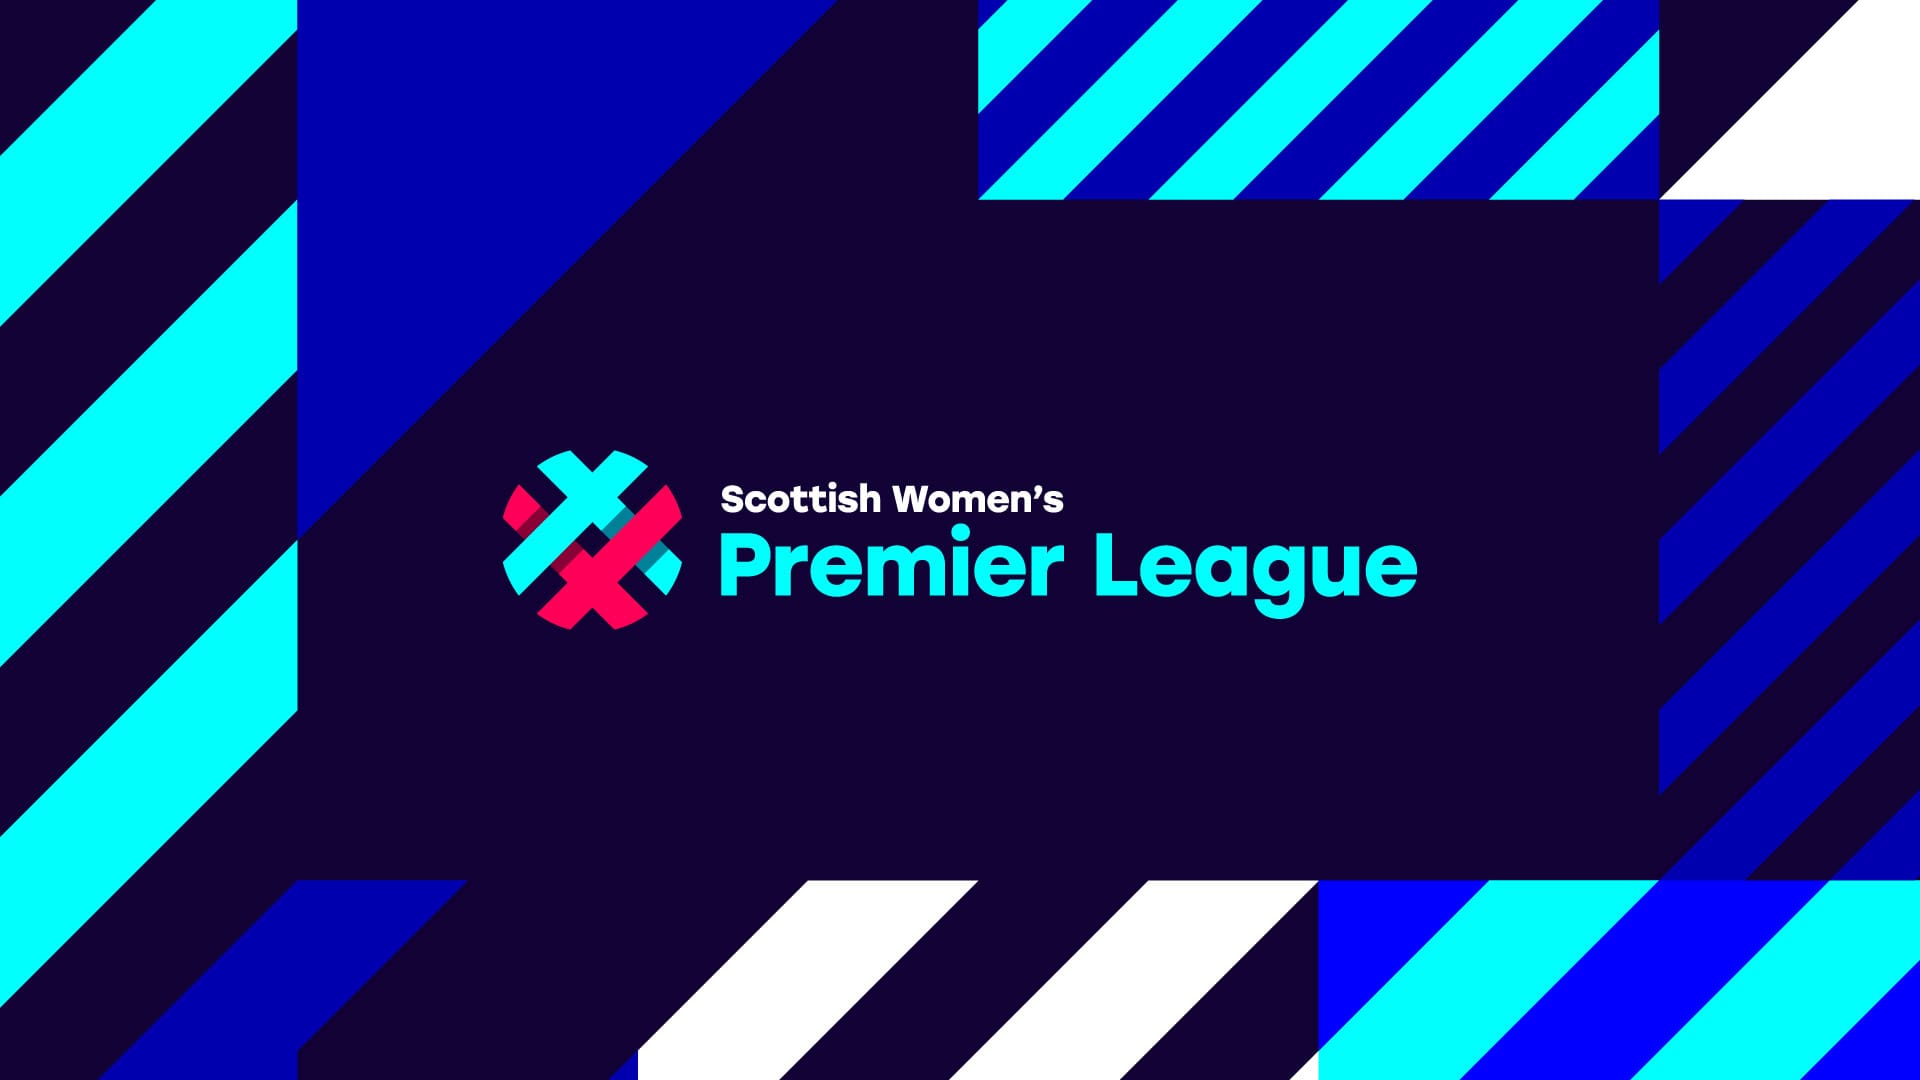 Scottish Women's Premier League (SWPL) logo and branding